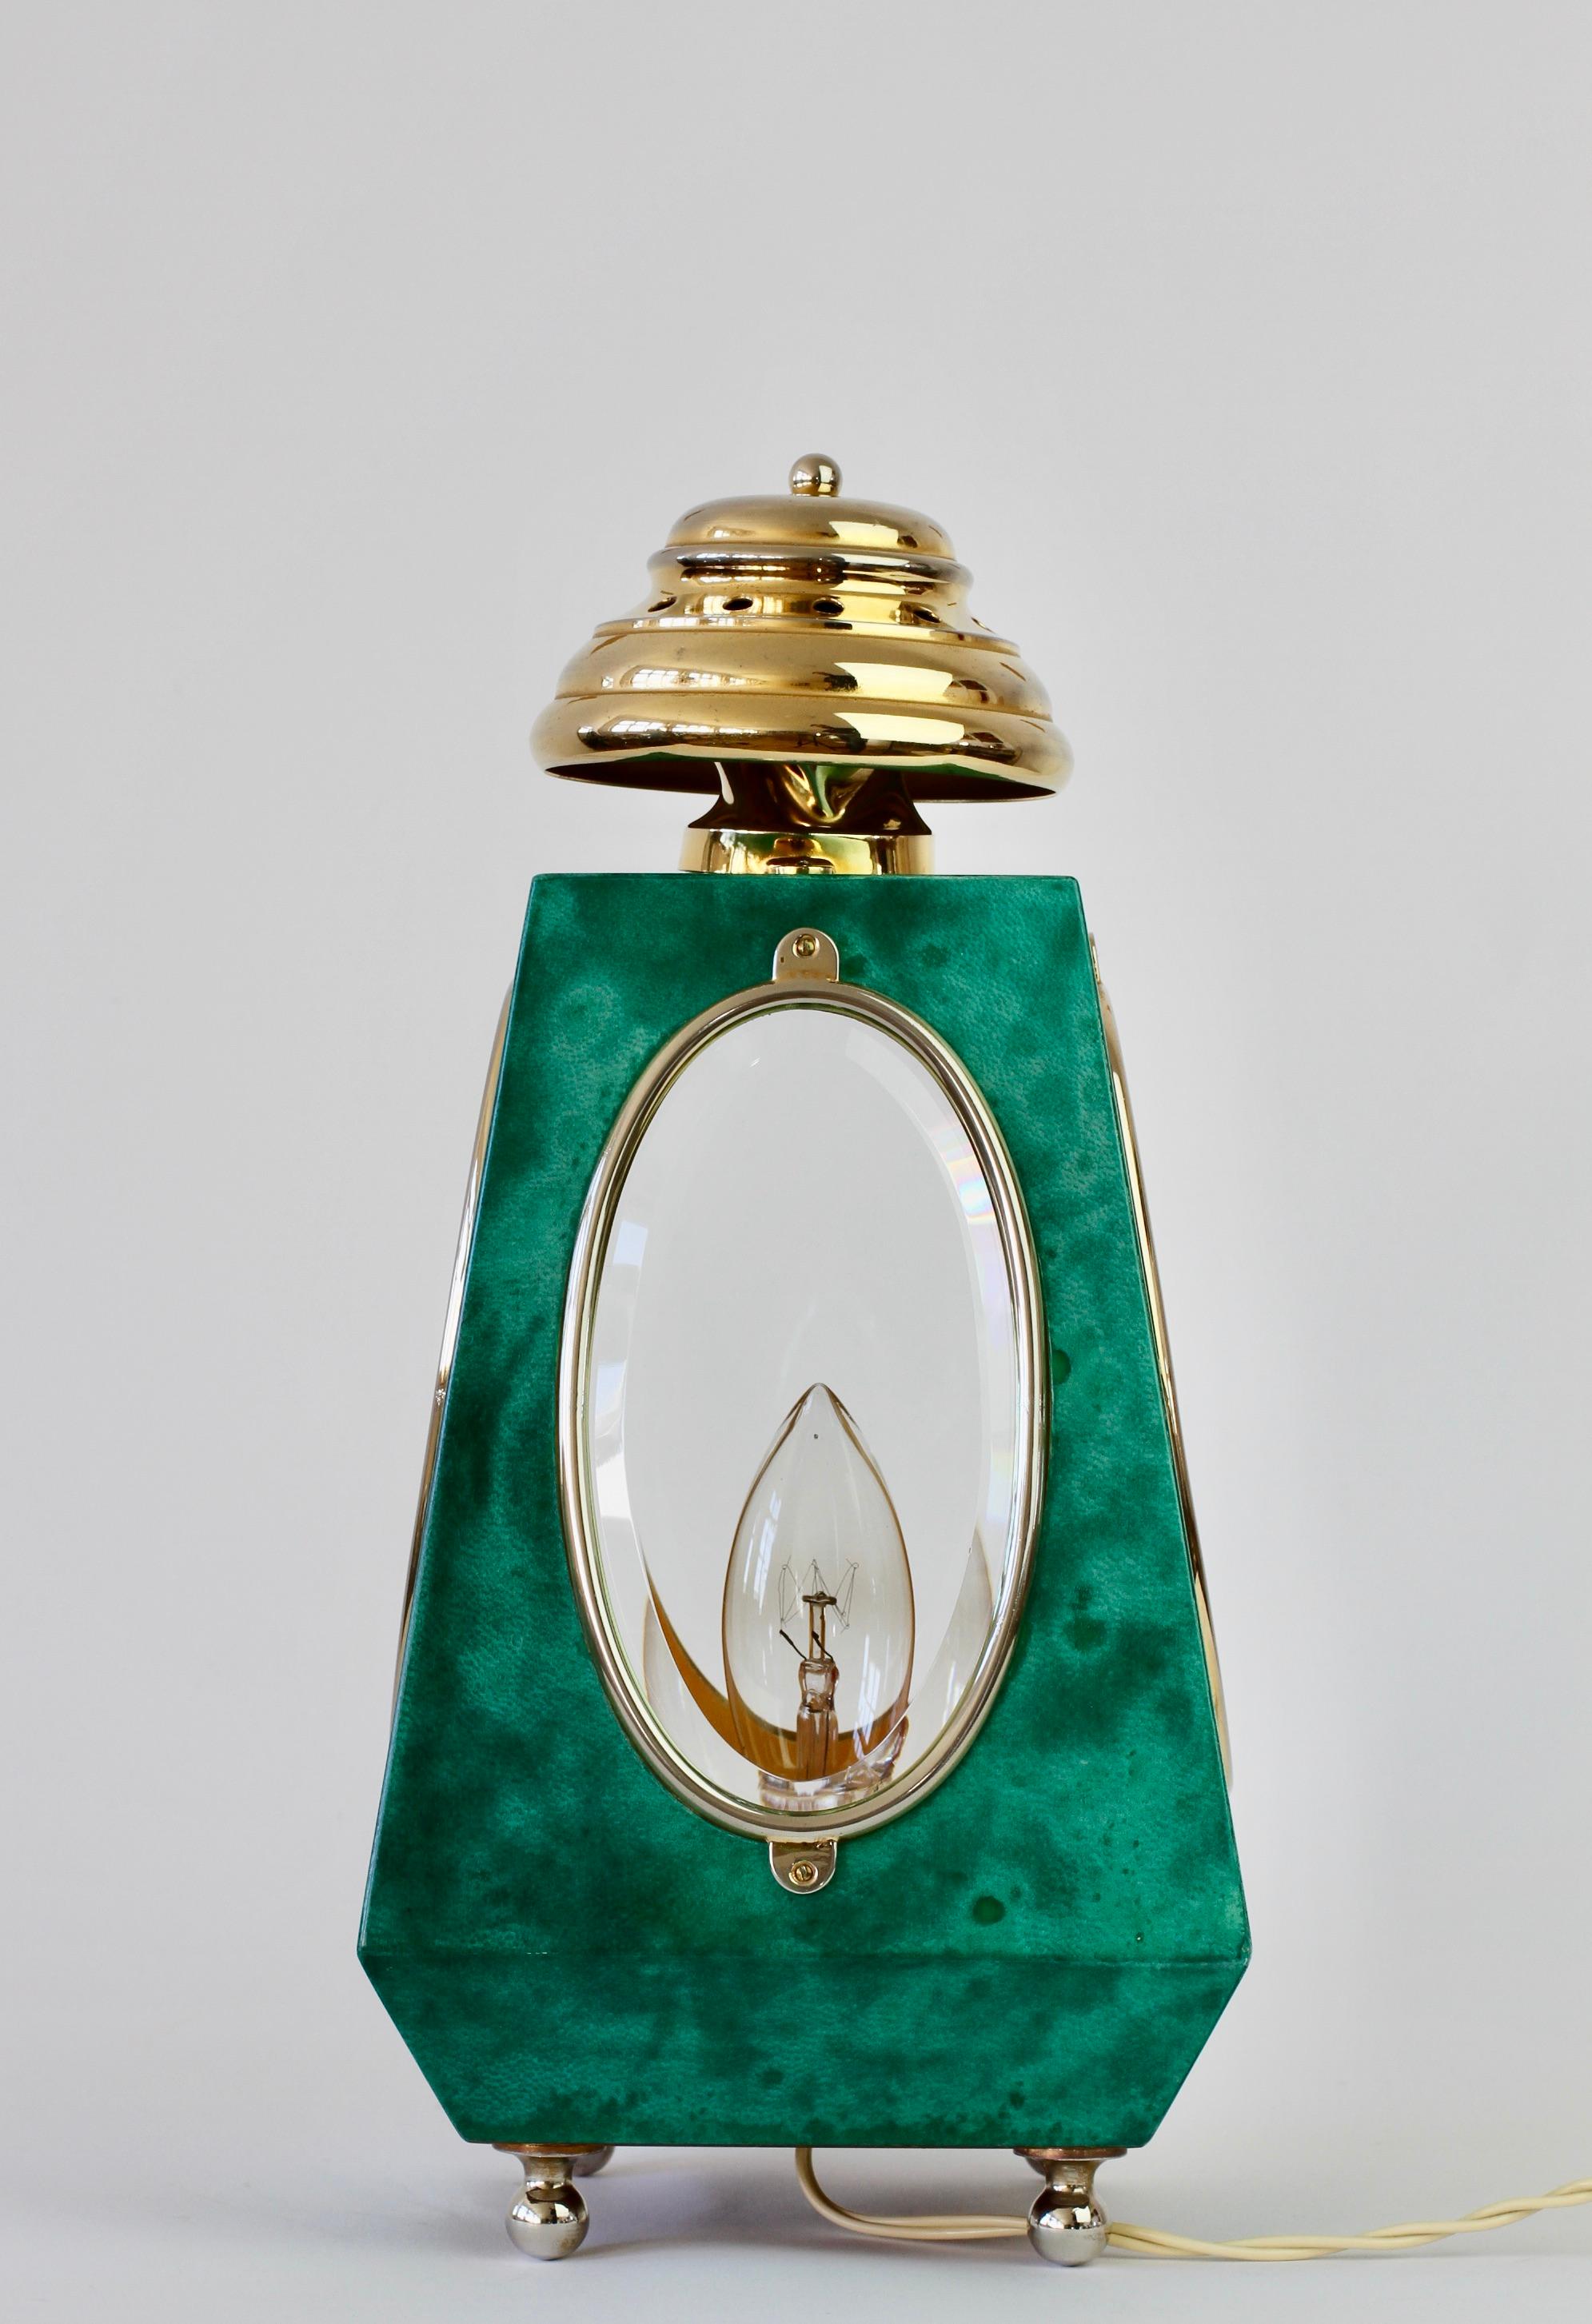 Aldo Tura 1960s Midcentury Table Lamp / Lantern in Green Italian Goatskin 2